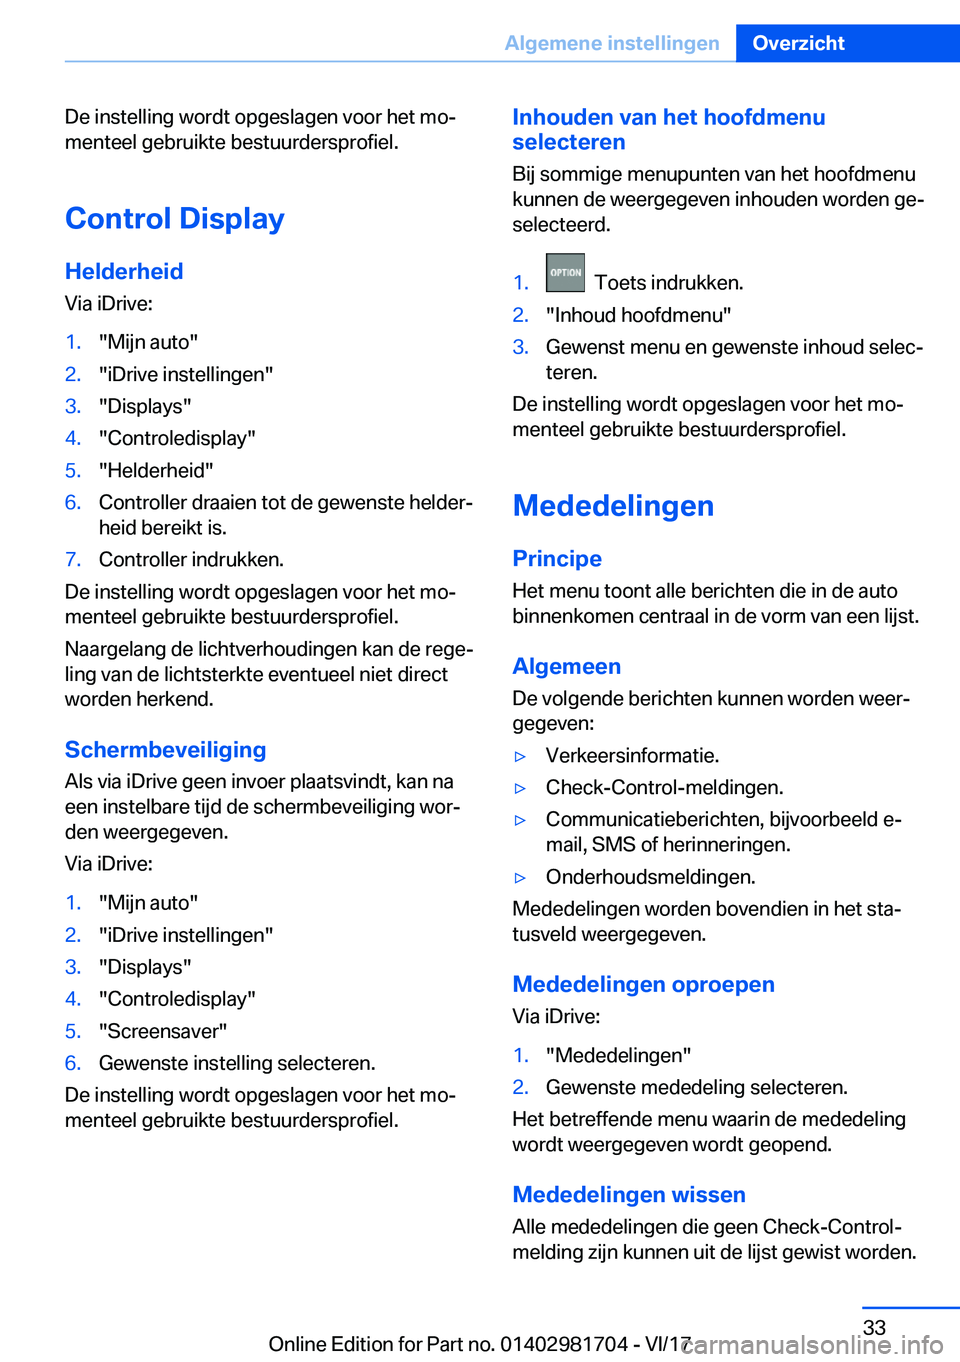 BMW M4 2018  Instructieboekjes (in Dutch) �D�e� �i�n�s�t�e�l�l�i�n�g� �w�o�r�d�t� �o�p�g�e�s�l�a�g�e�n� �v�o�o�r� �h�e�t� �m�oj�m�e�n�t�e�e�l� �g�e�b�r�u�i�k�t�e� �b�e�s�t�u�u�r�d�e�r�s�p�r�o�f�i�e�l�.
�C�o�n�t�r�o�l��D�i�s�p�l�a�y
�H�e�l�d